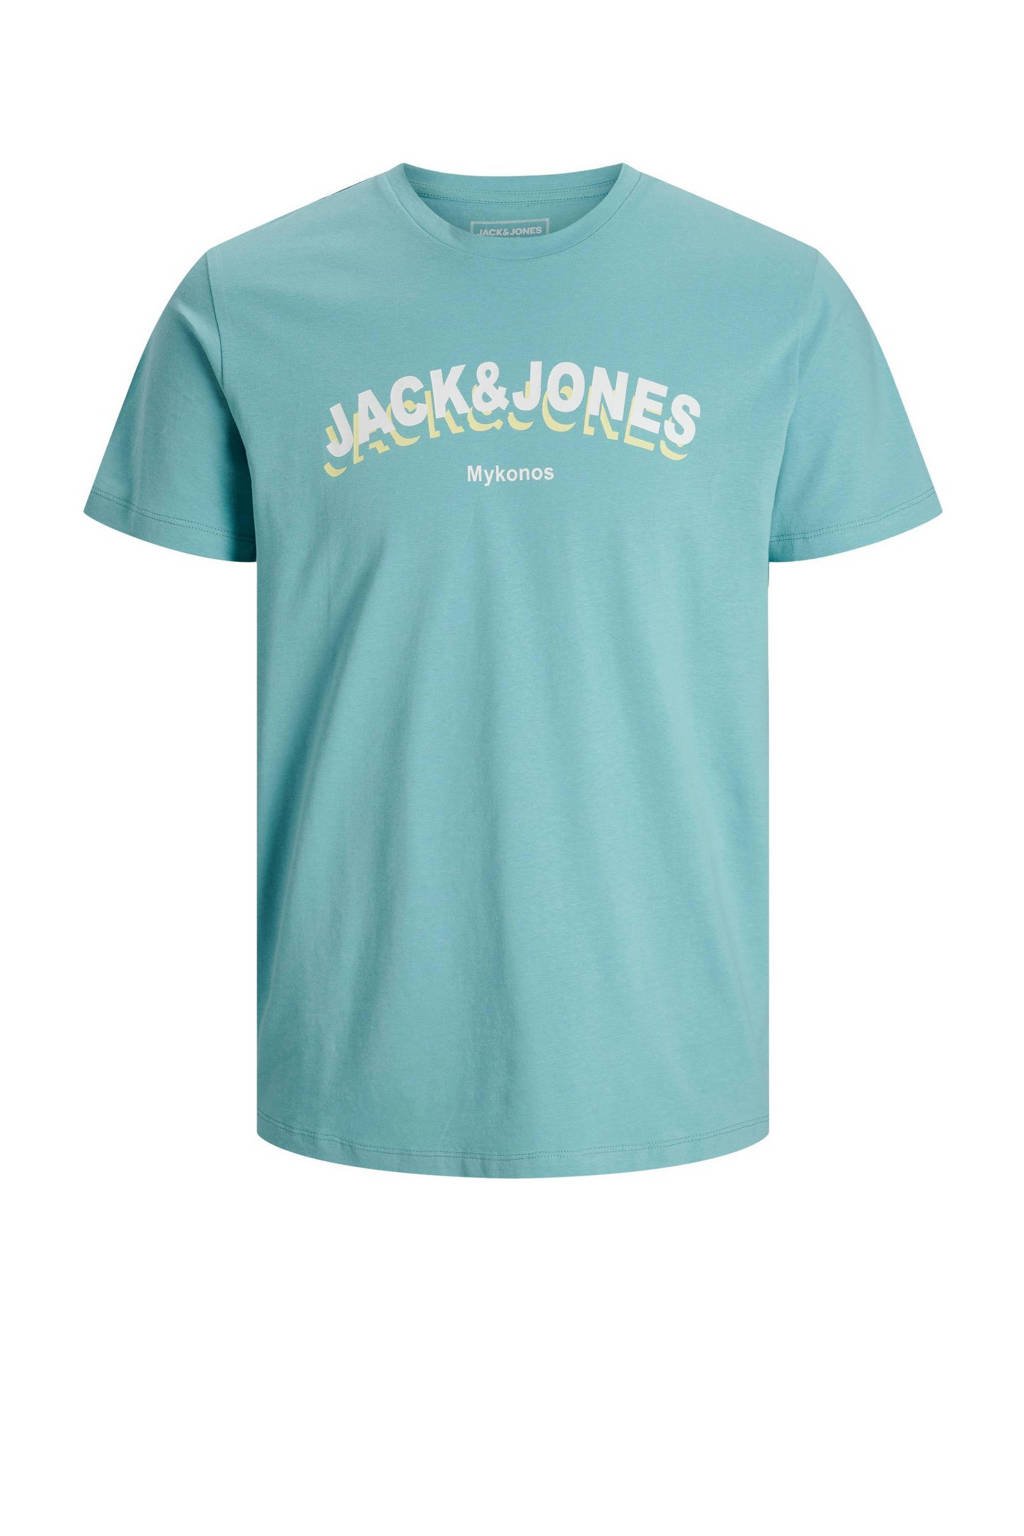 JACK & JONES CORE regular fit T-shirt JCOSETH met logo marine blue